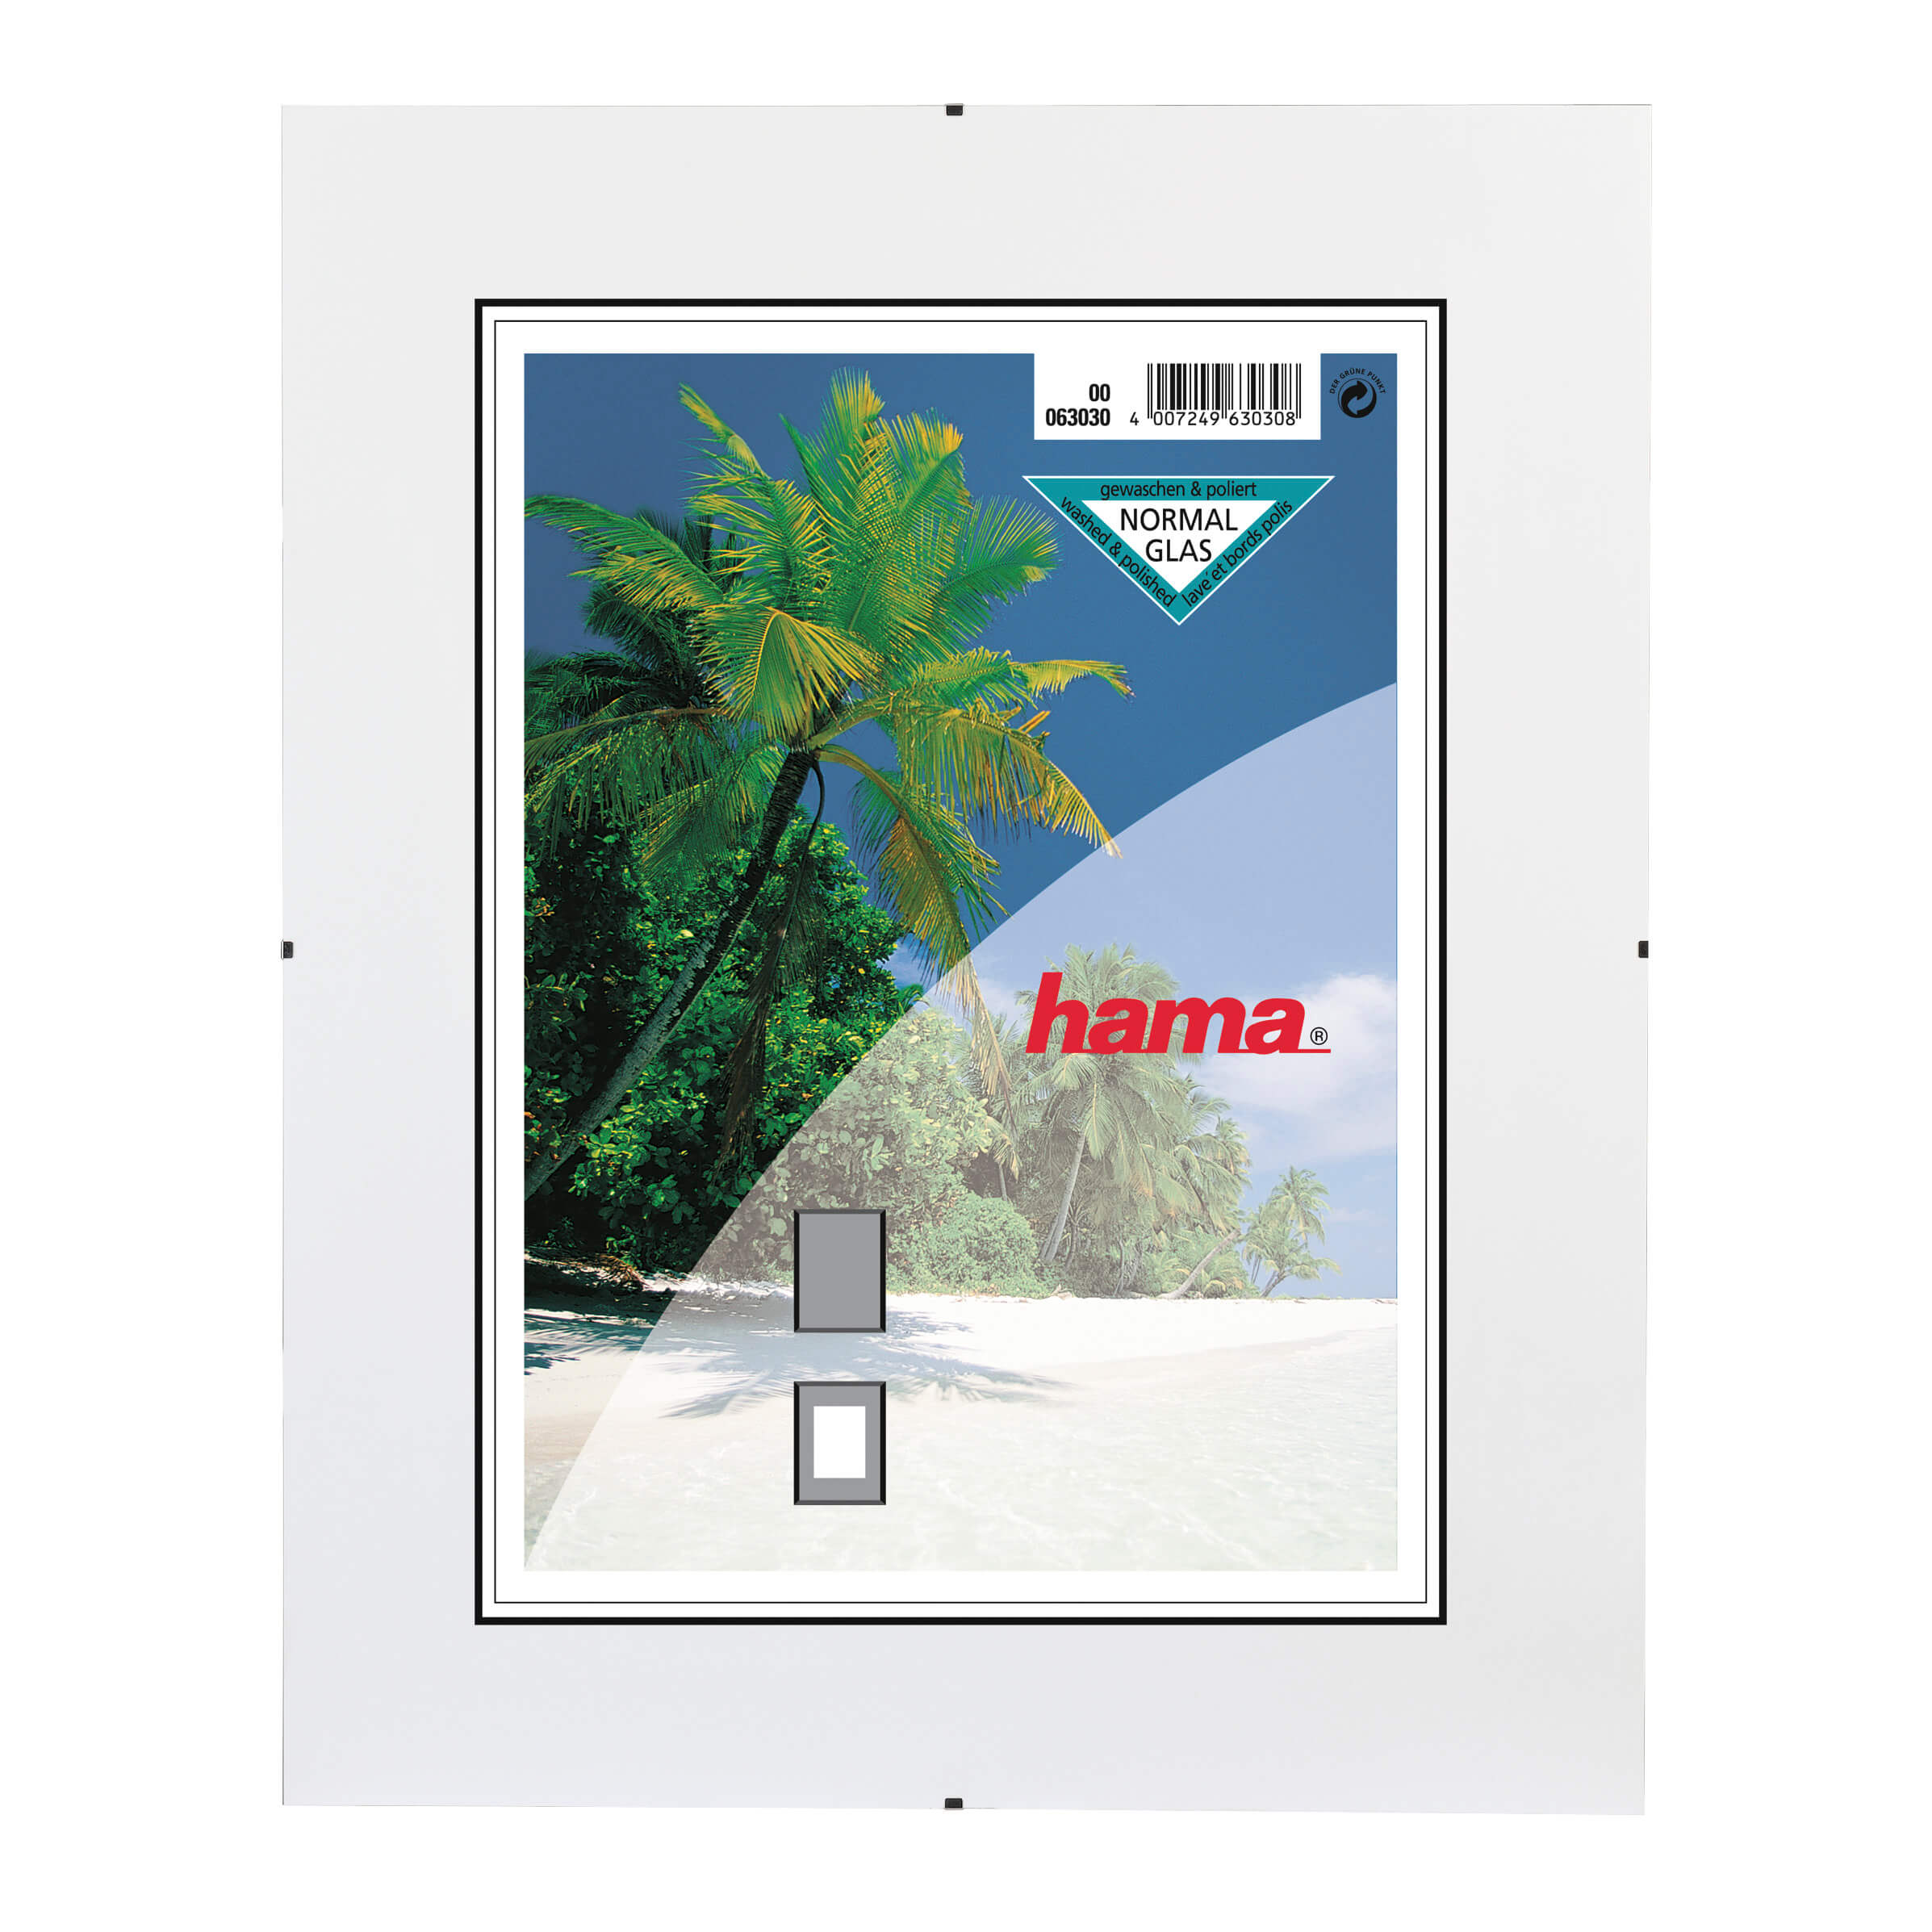 HAMA Clip-Fix Frameless Picture Ho lder, normal glass, 30 x 40 cm